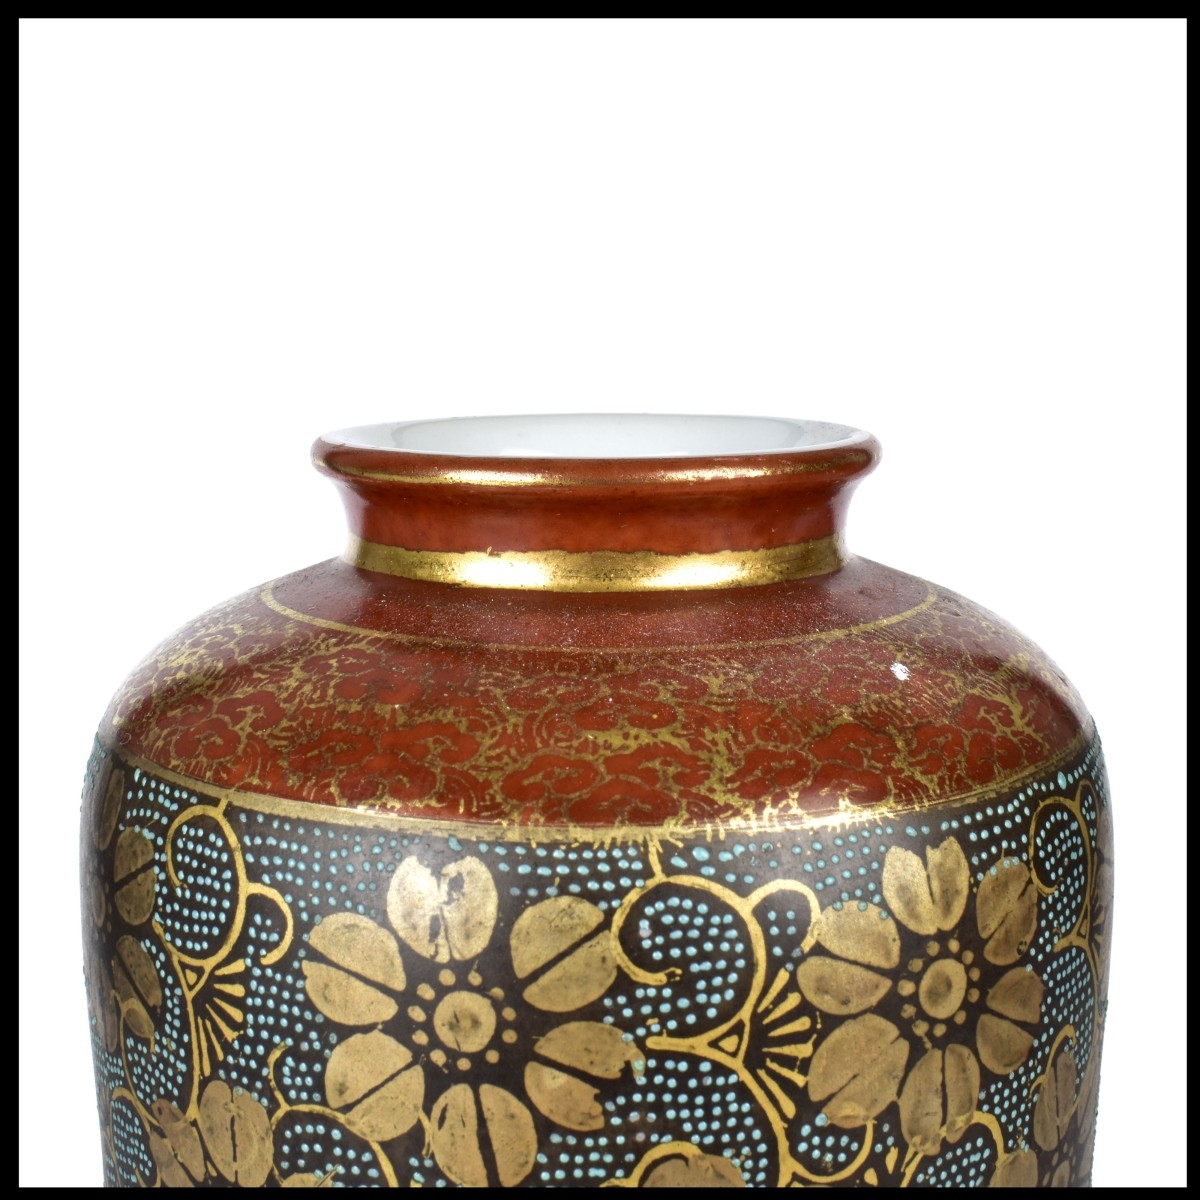 Pair of Japanese Satsuma Porcelain Vases